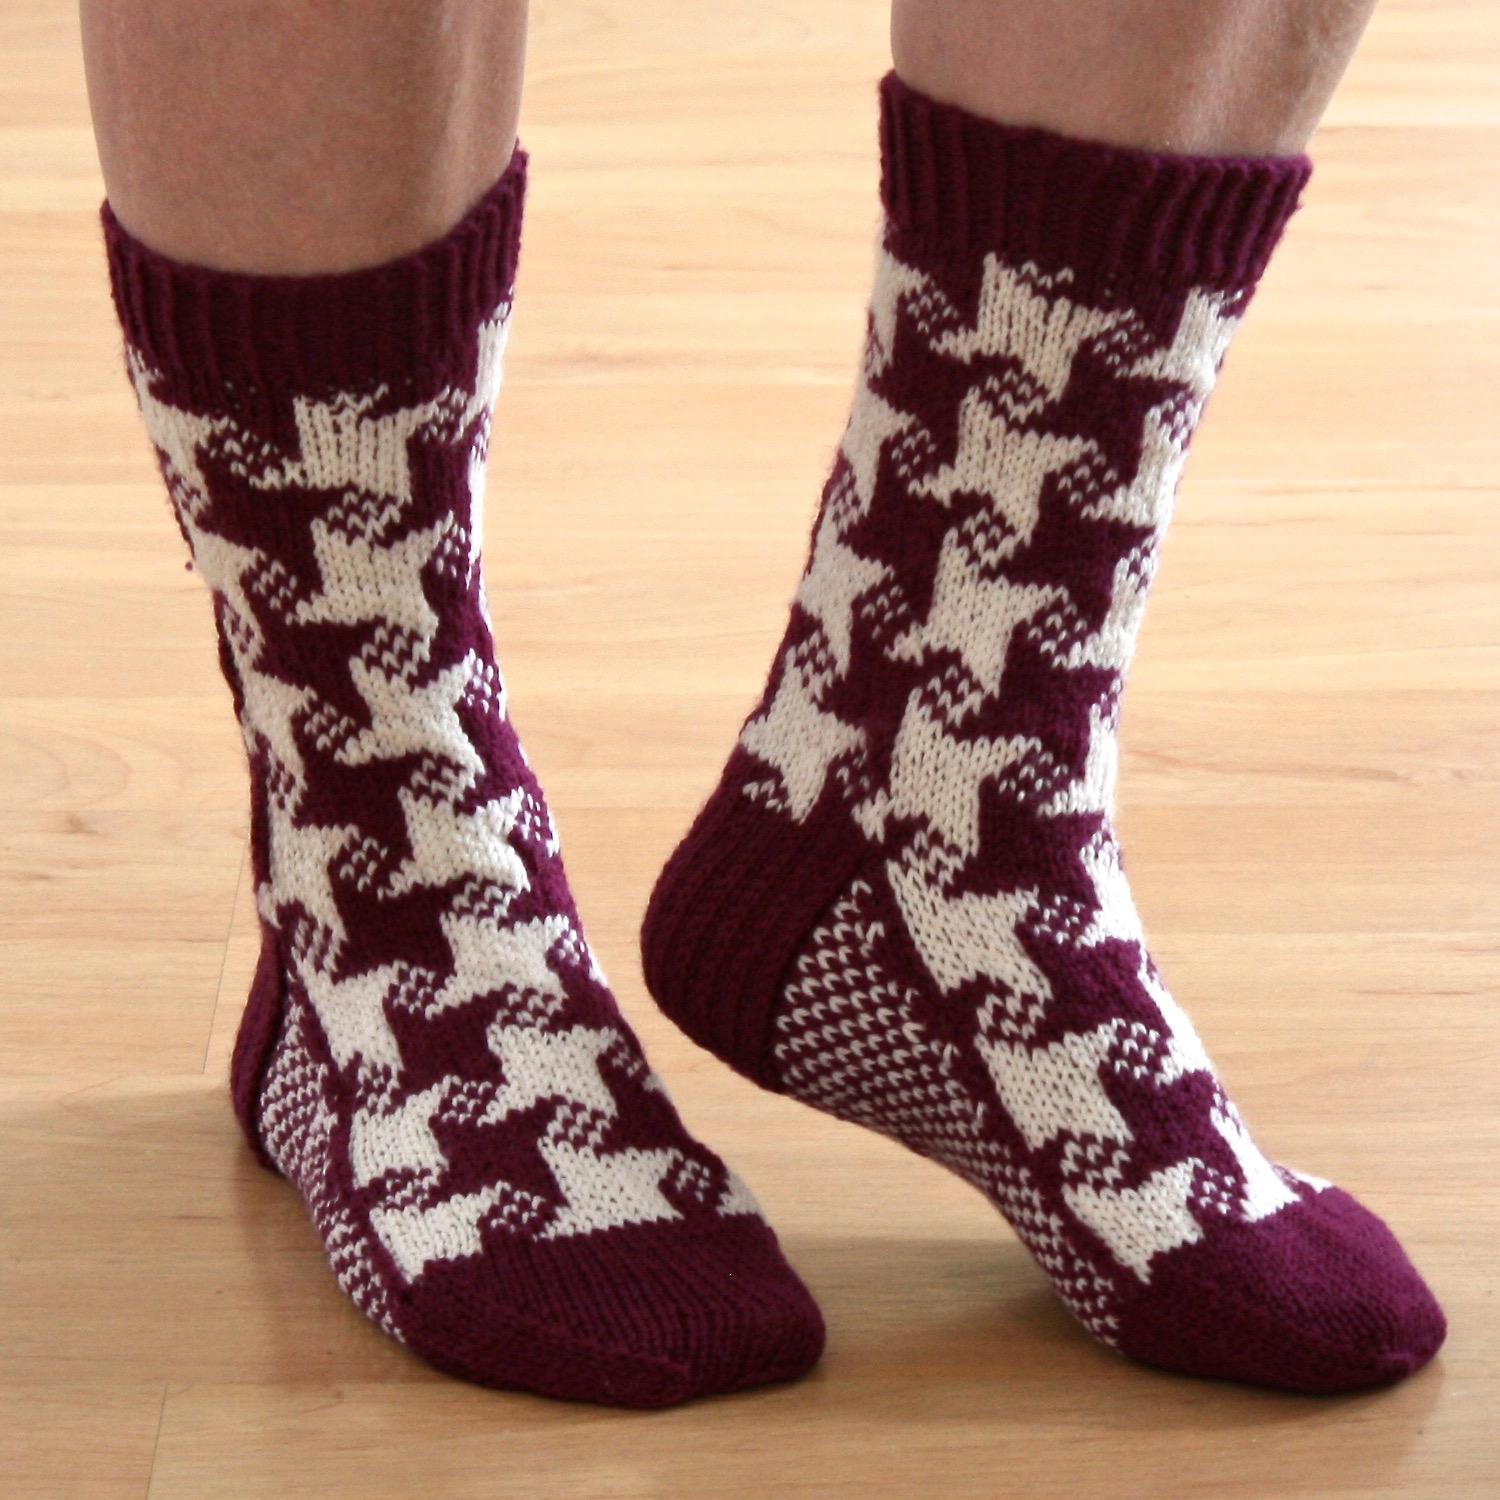 Swirling Star Socks - Knitwise Design